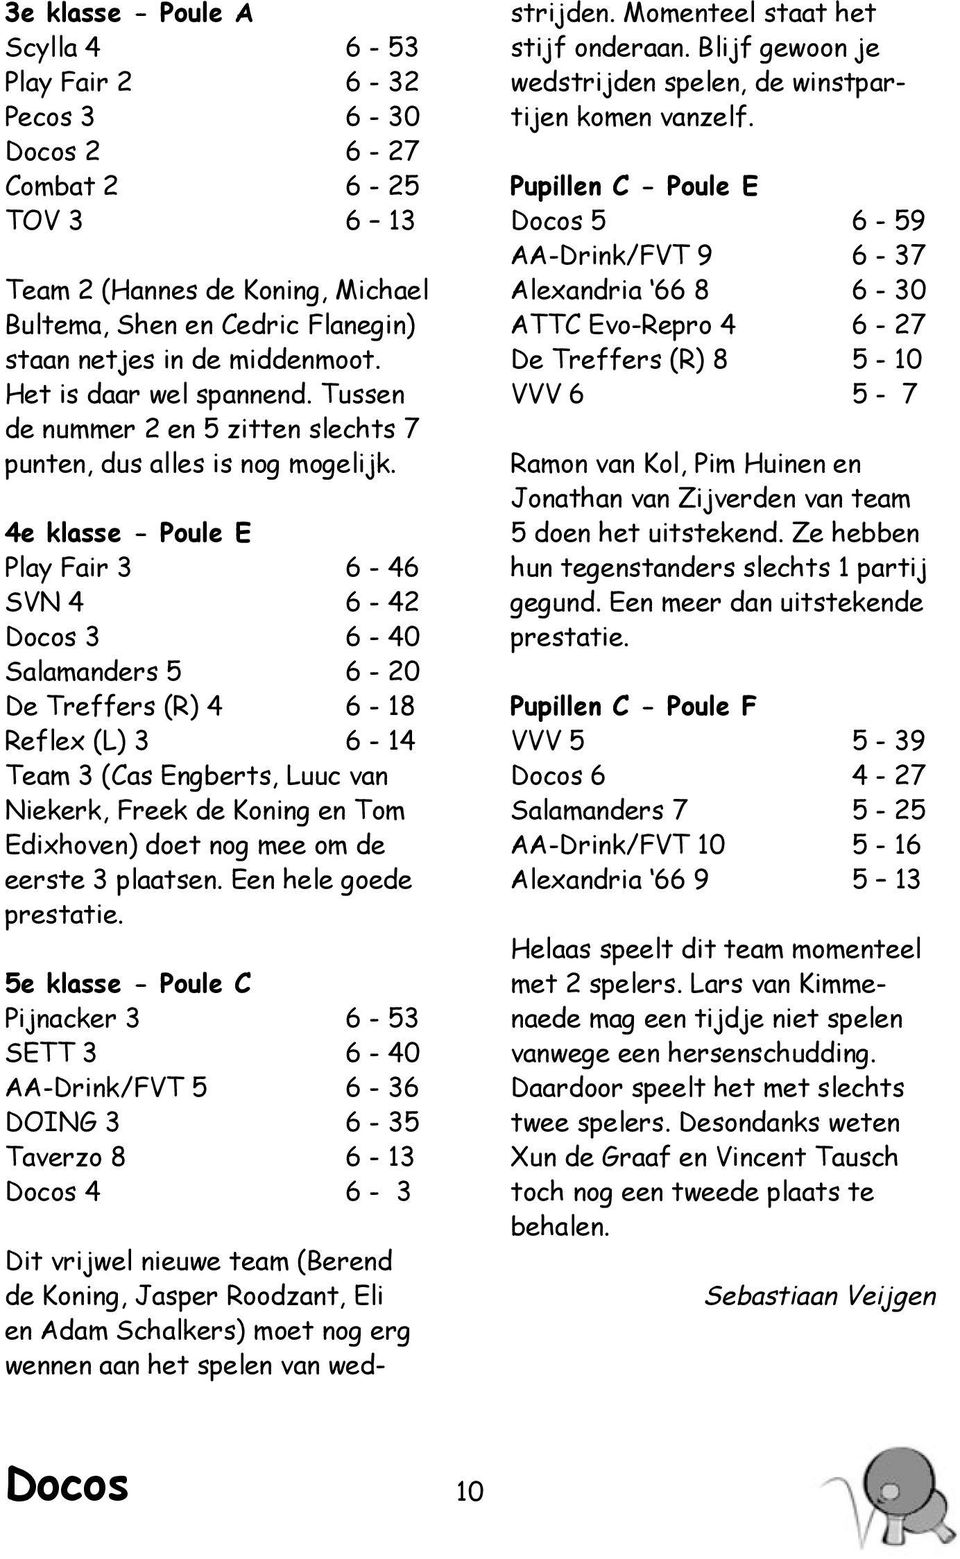 4e klasse - Poule E Play Fair 3 6-46 SVN 4 6-42 3 6-40 Salamanders 5 6-20 De Treffers (R) 4 6-18 Reflex (L) 3 6-14 Team 3 (Cas Engberts, Luuc van Niekerk, Freek de Koning en Tom Edixhoven) doet nog